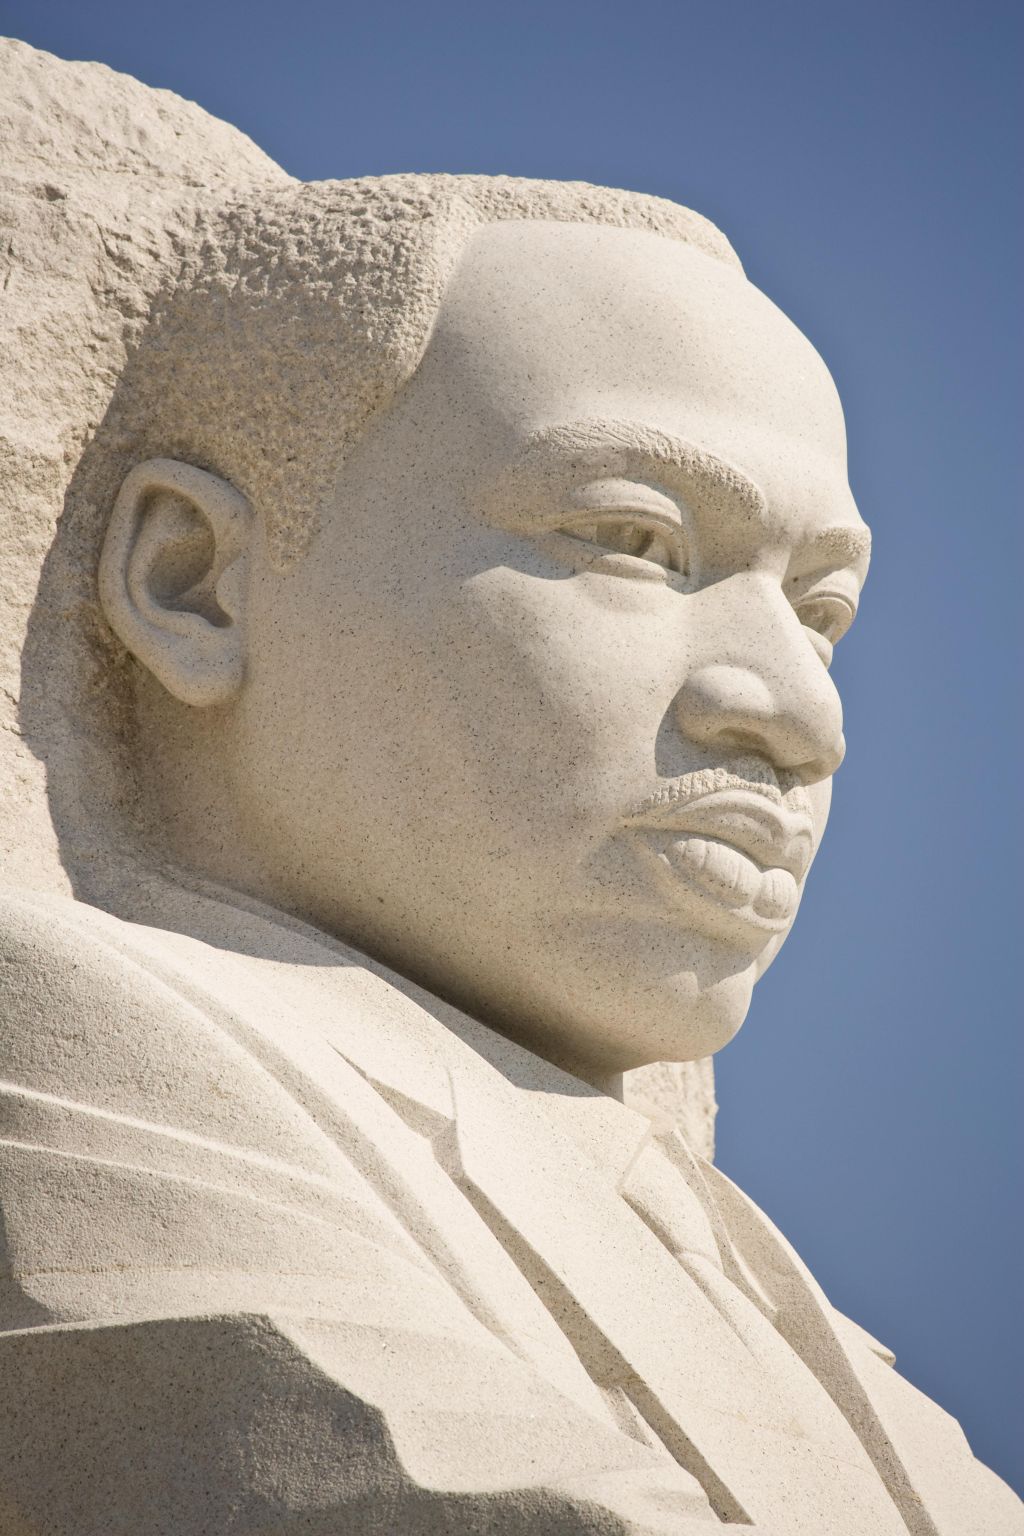 Martin Luther King Jr Memorial, Washington, DC